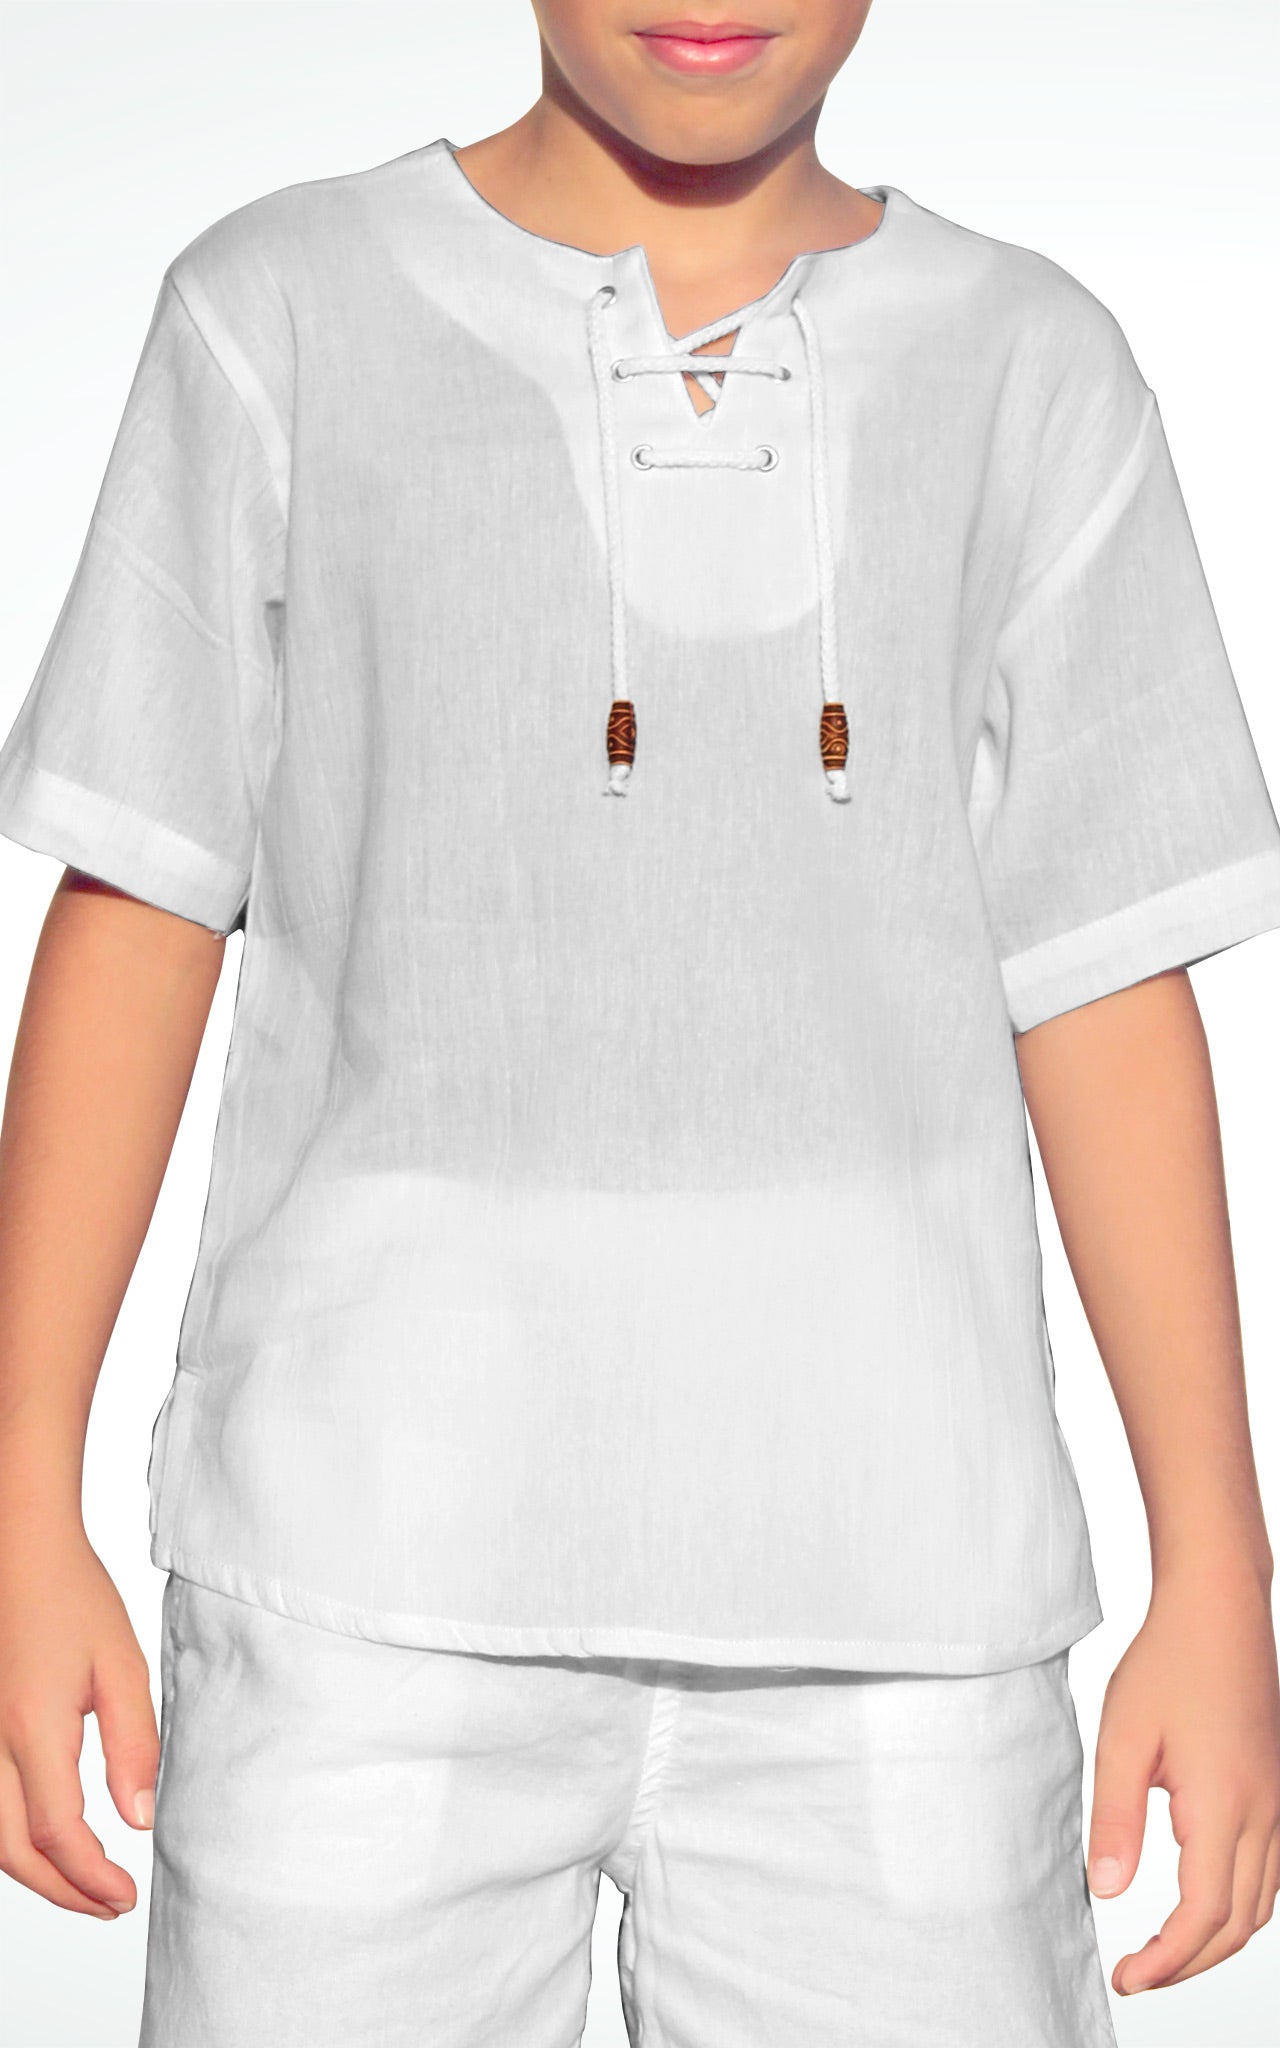 Boys' Lace Up Short Sleeve White Cotton T-Shirt